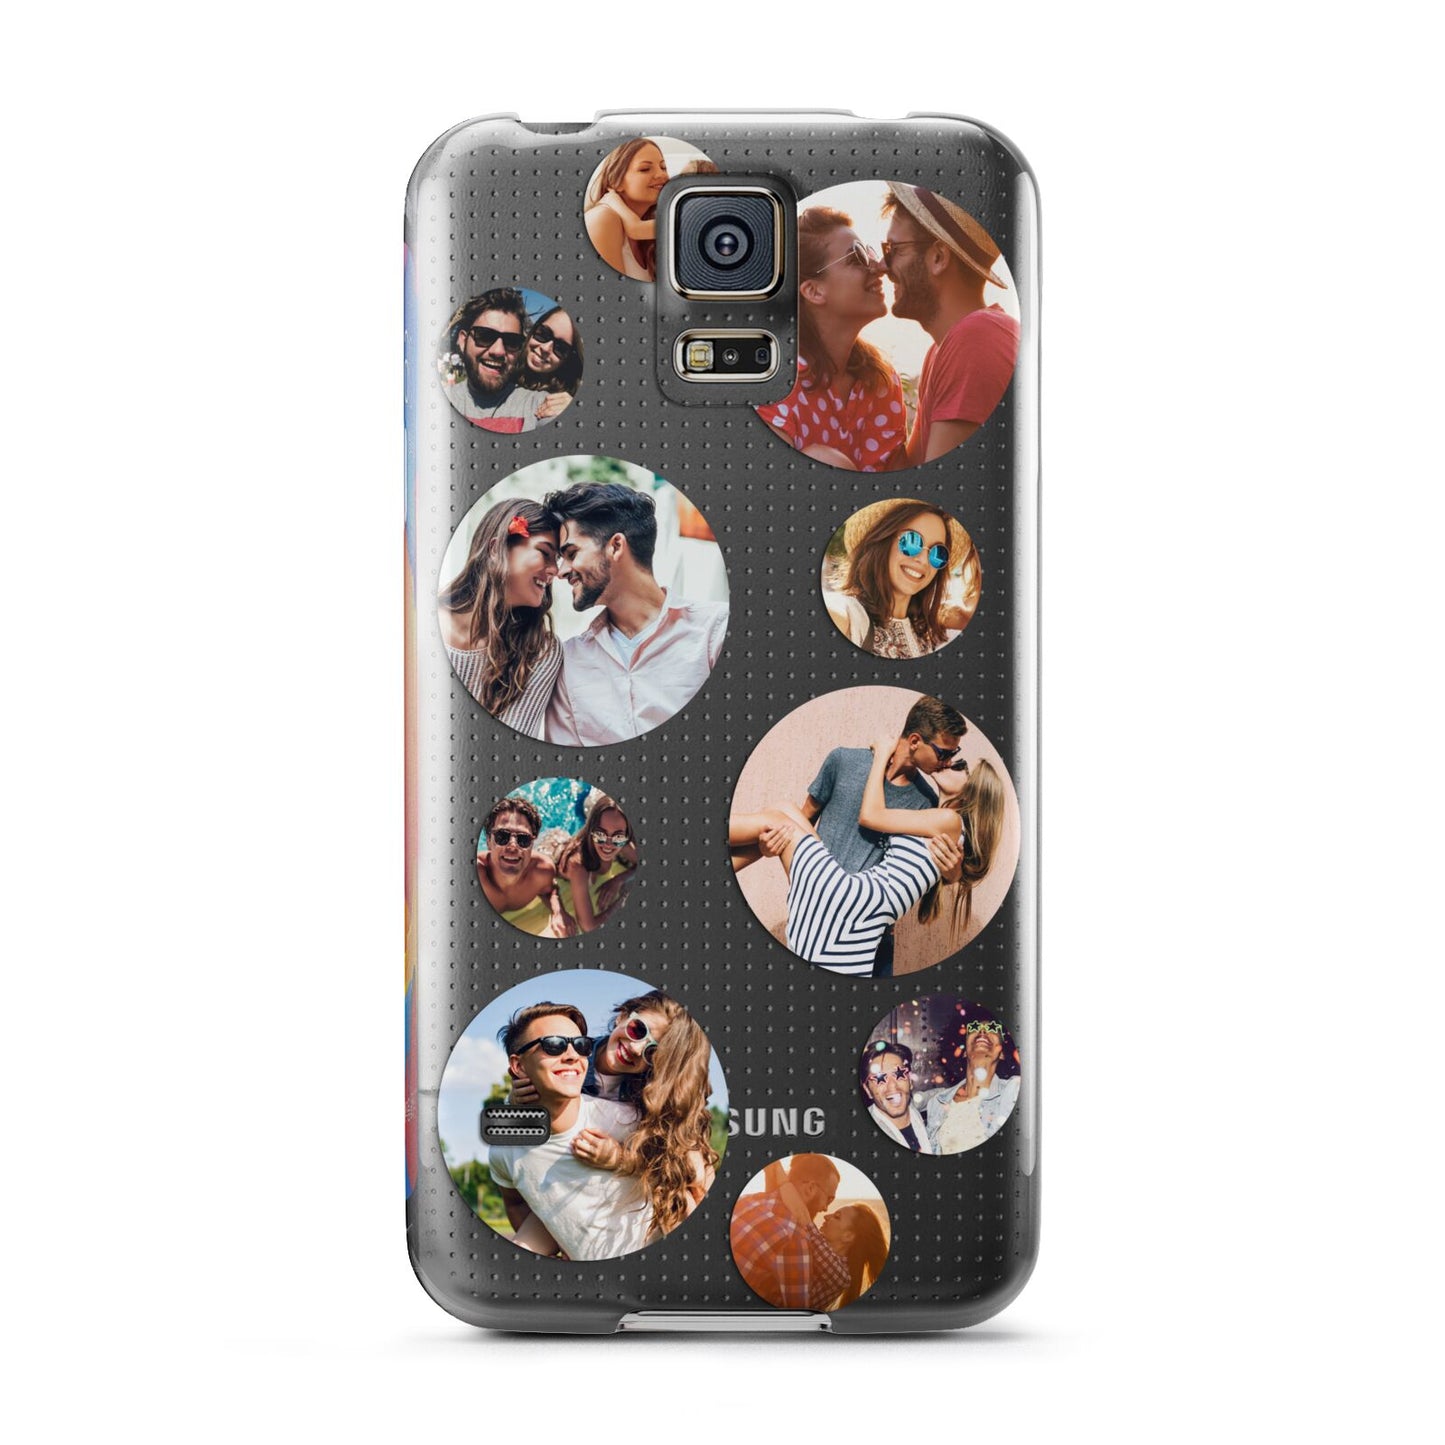 Multi Circular Photo Collage Upload Samsung Galaxy S5 Case